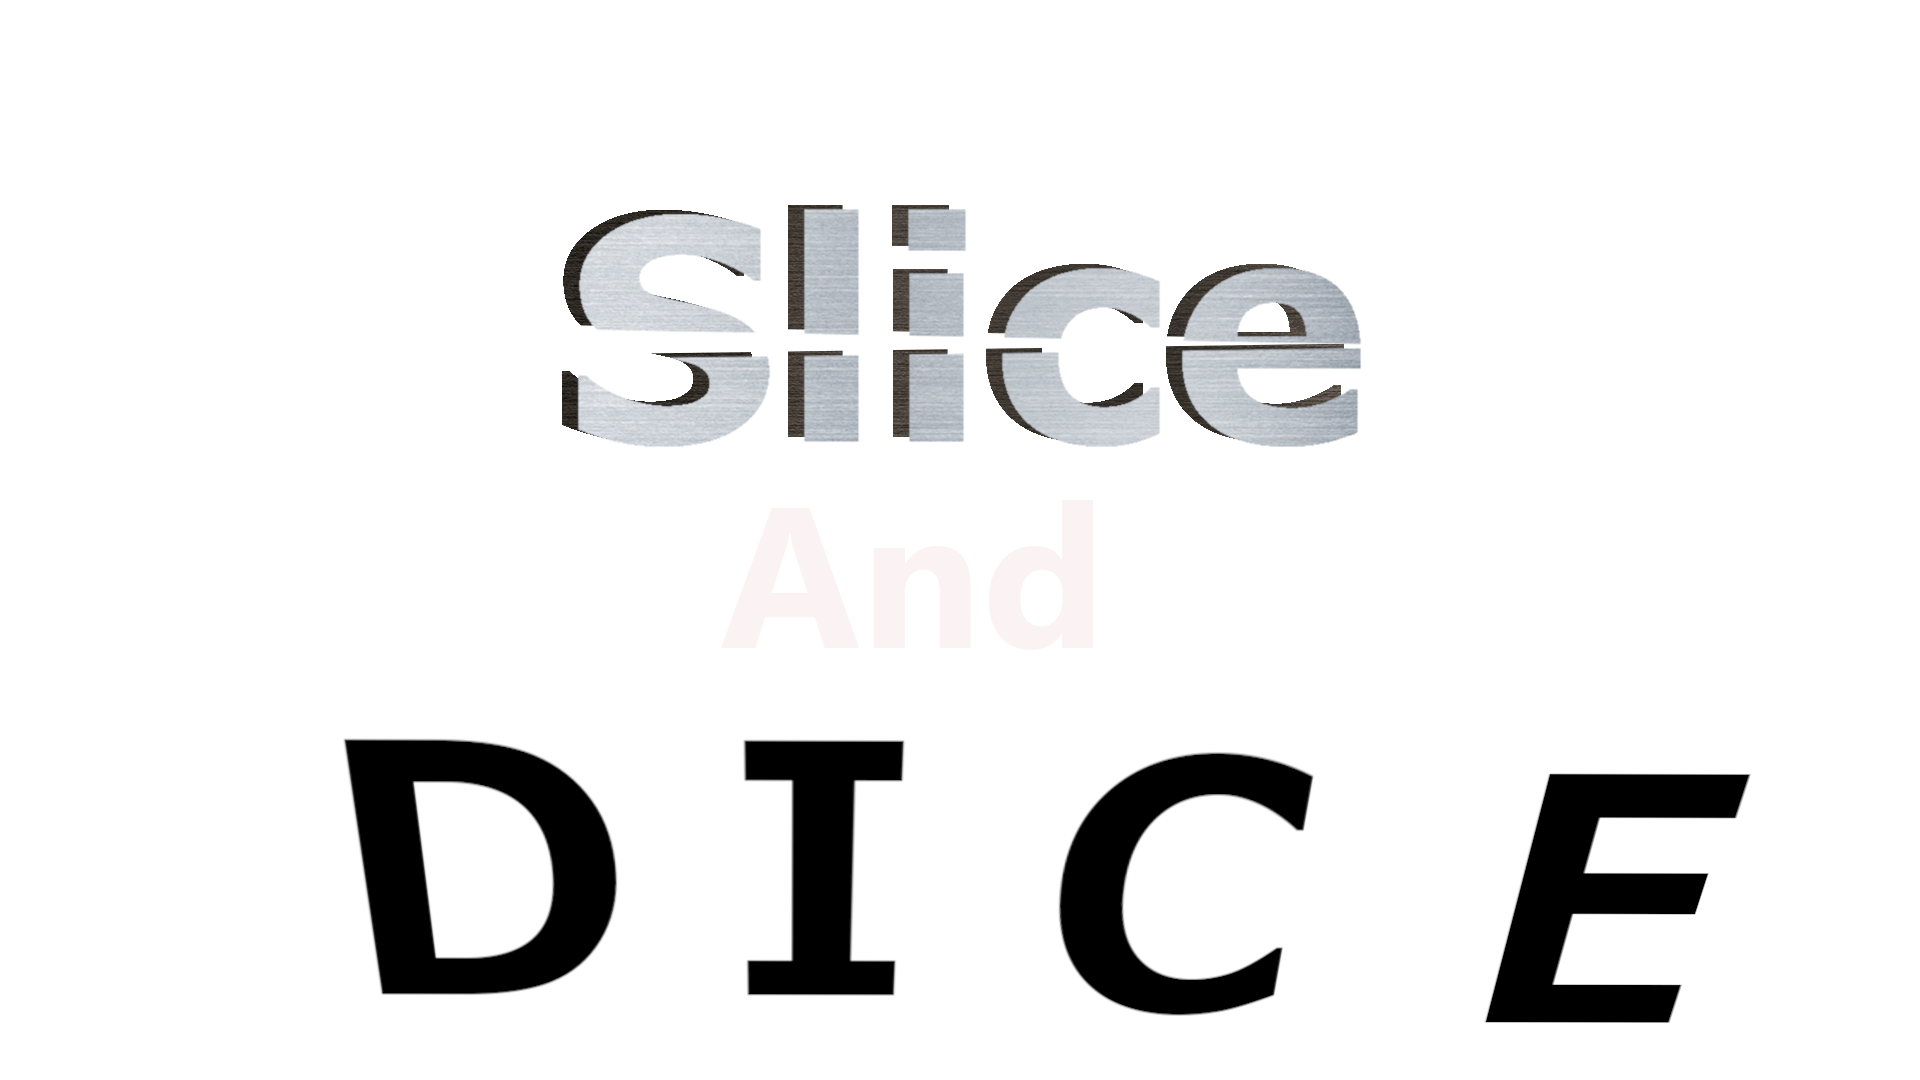 Slice and Dice